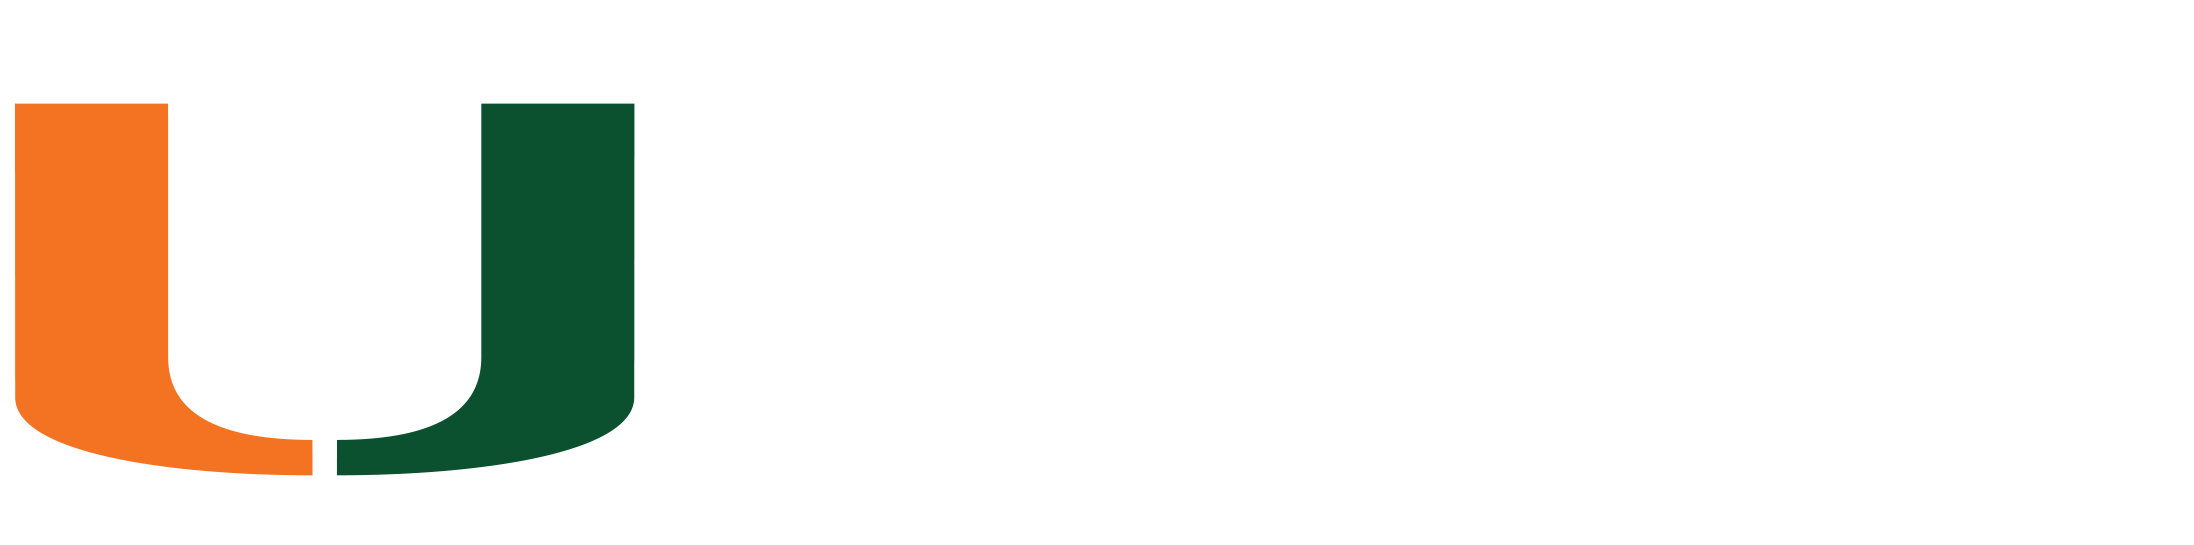 University Of Miami - Small University Of Miami Logo (2550x544), Png Download